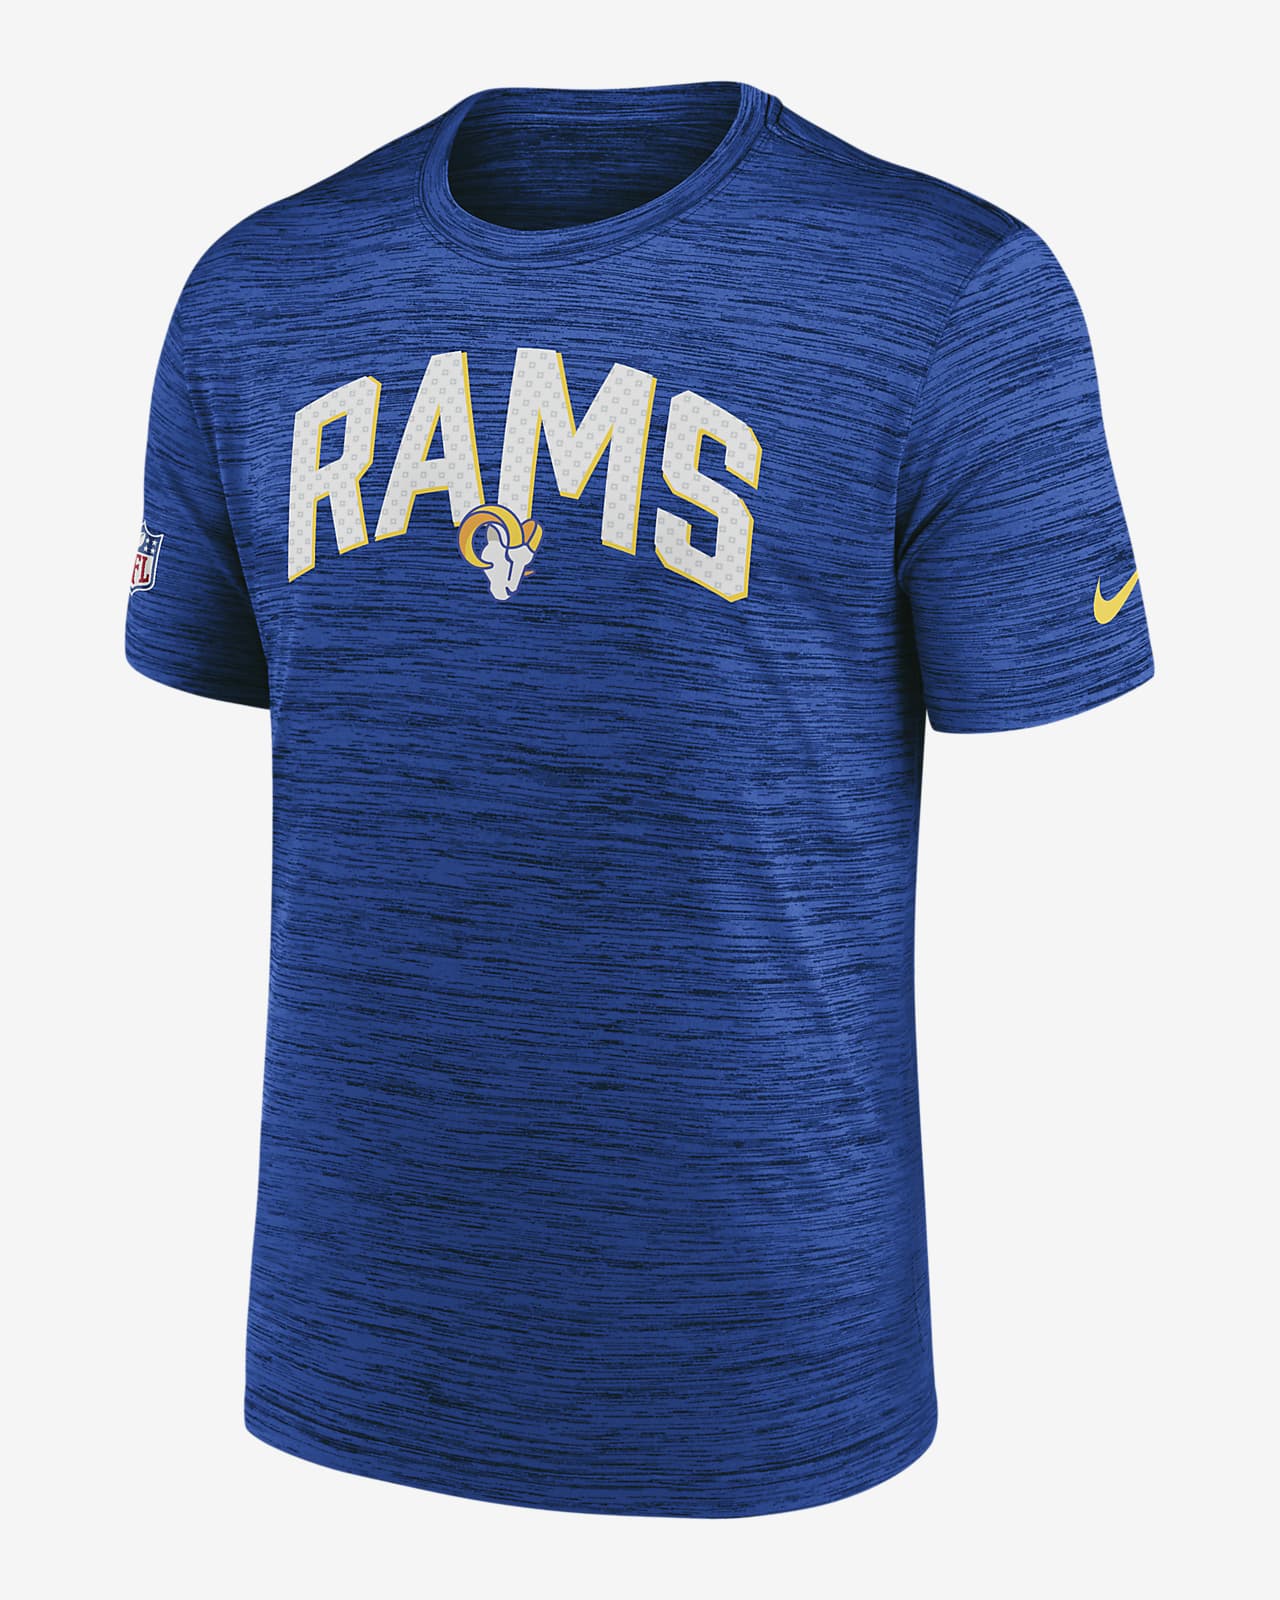 Nike Dri-FIT Velocity Athletic Stack (NFL Los Angeles Rams) Men's T-Shirt